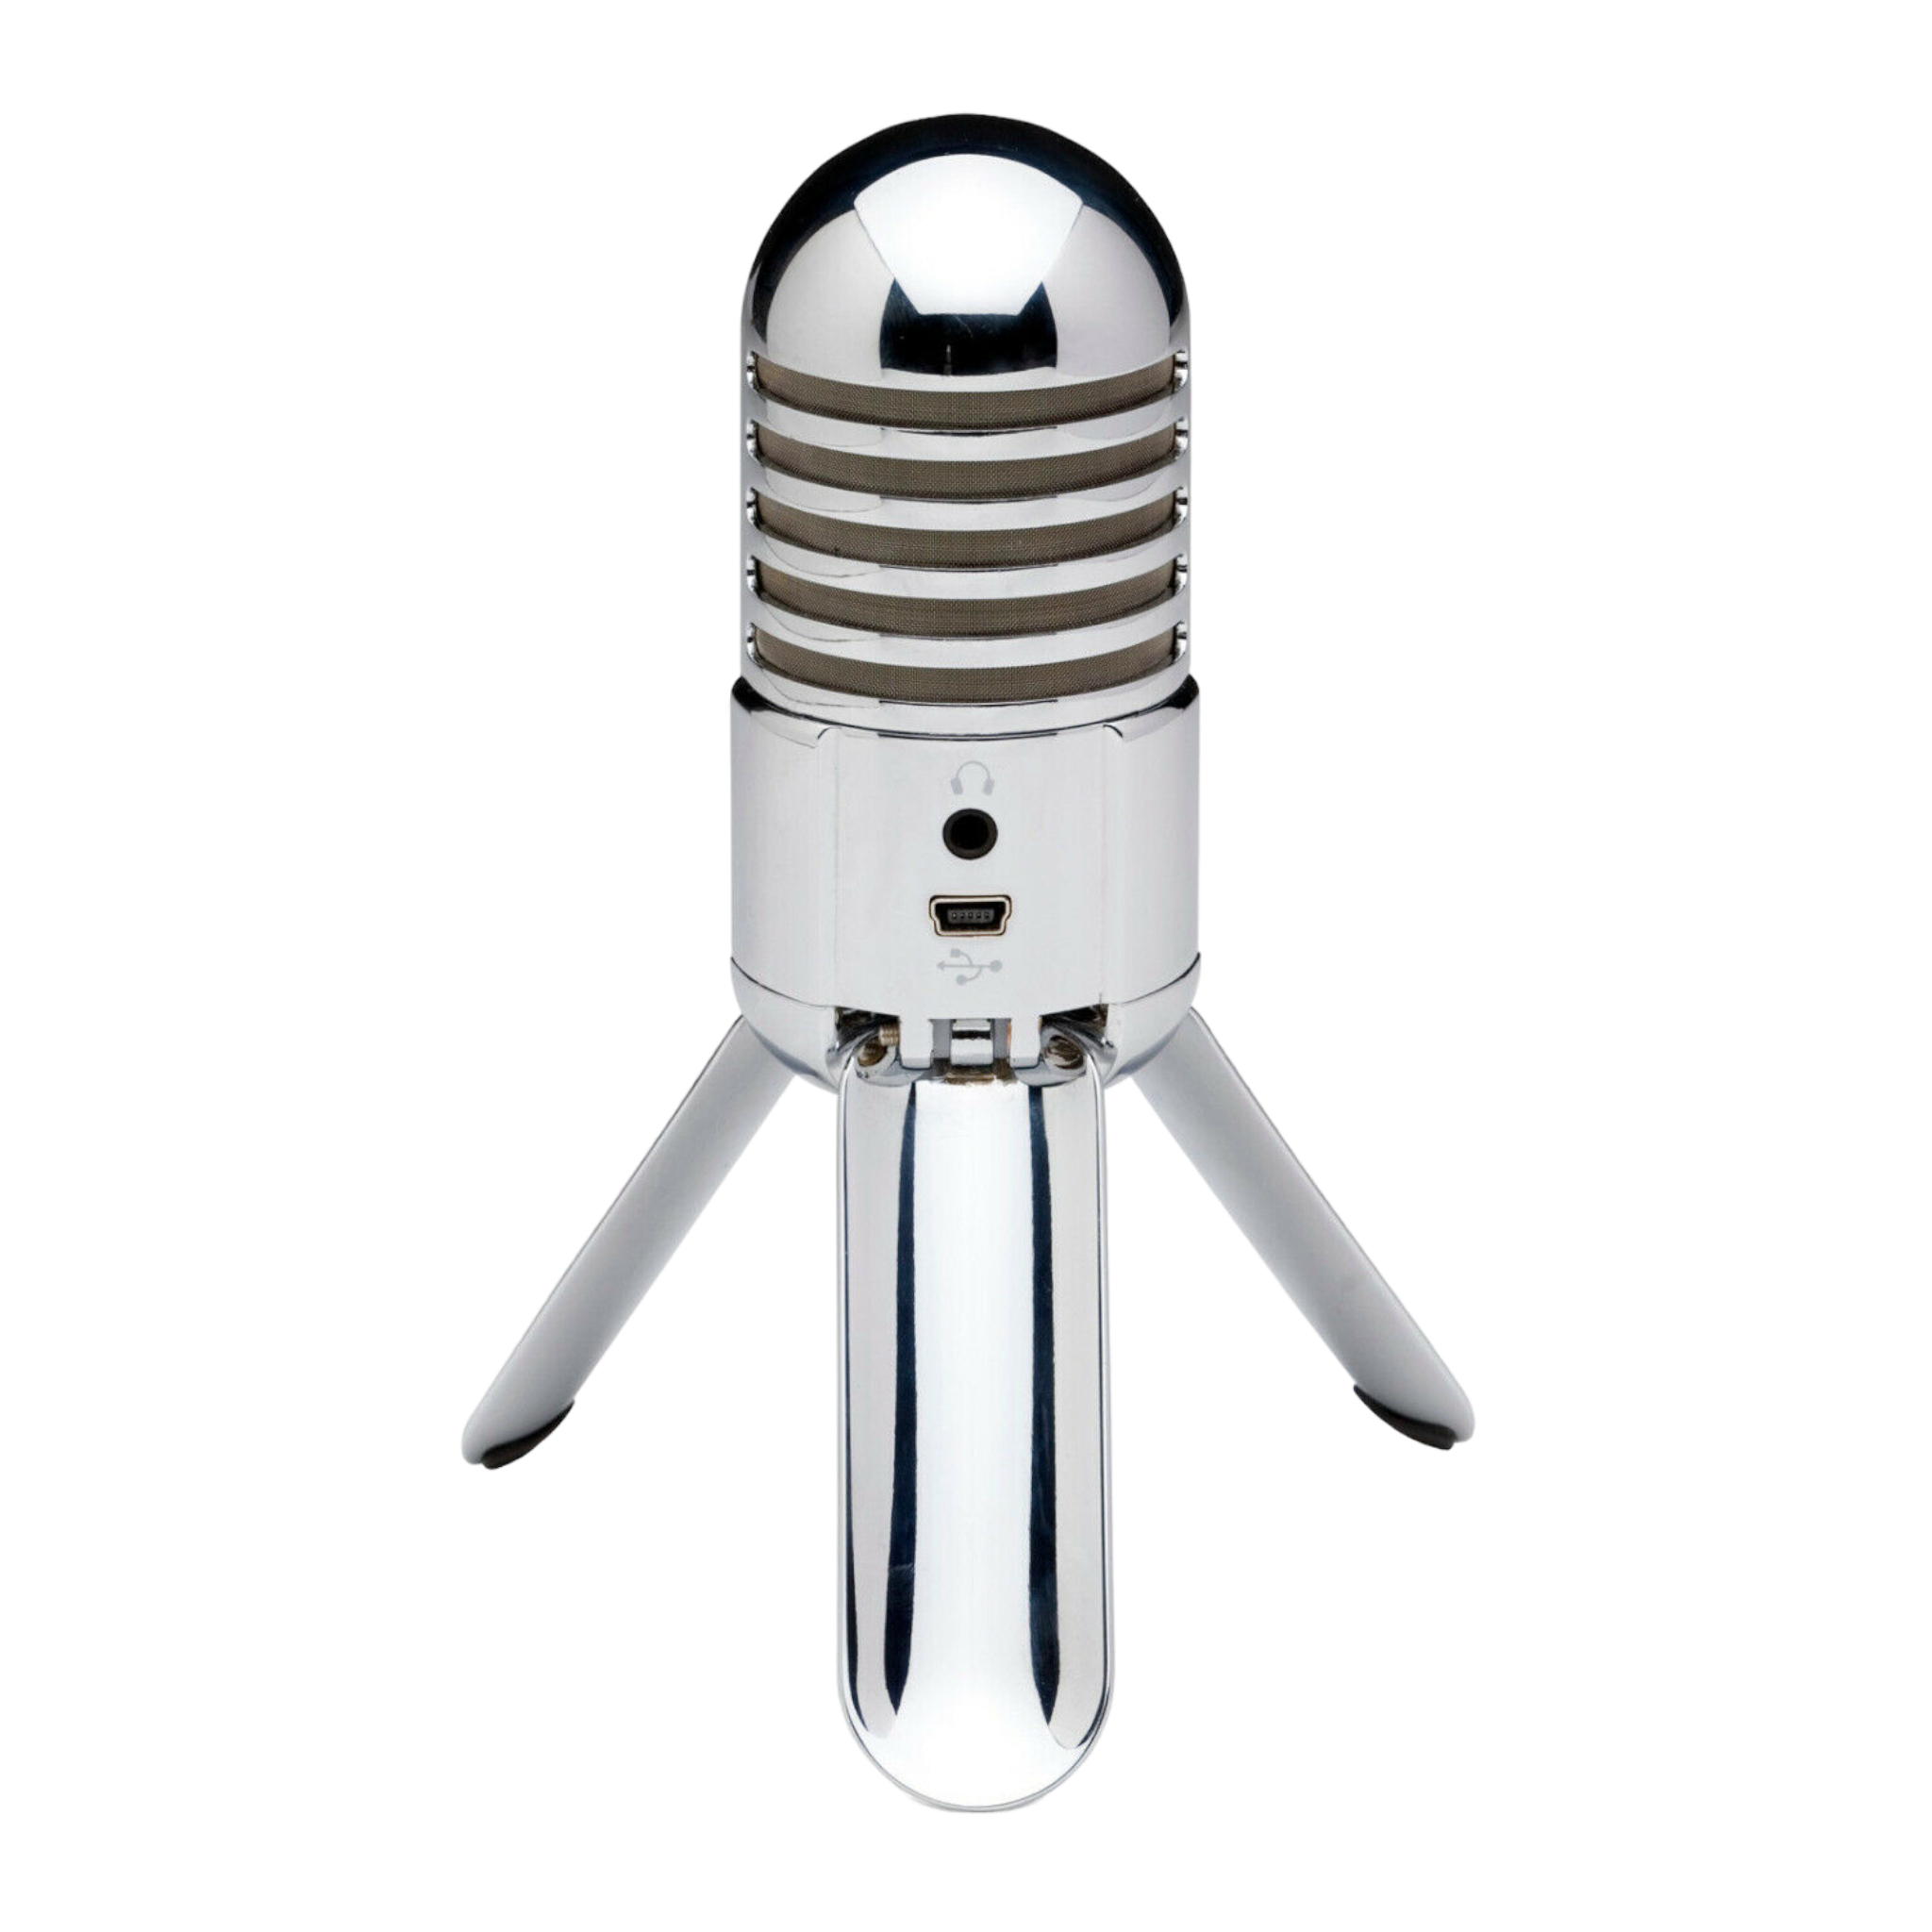 Samson Meteor Mic USB Studio Condenser Microphone - Silver - SAMTR - Pro-Distributing